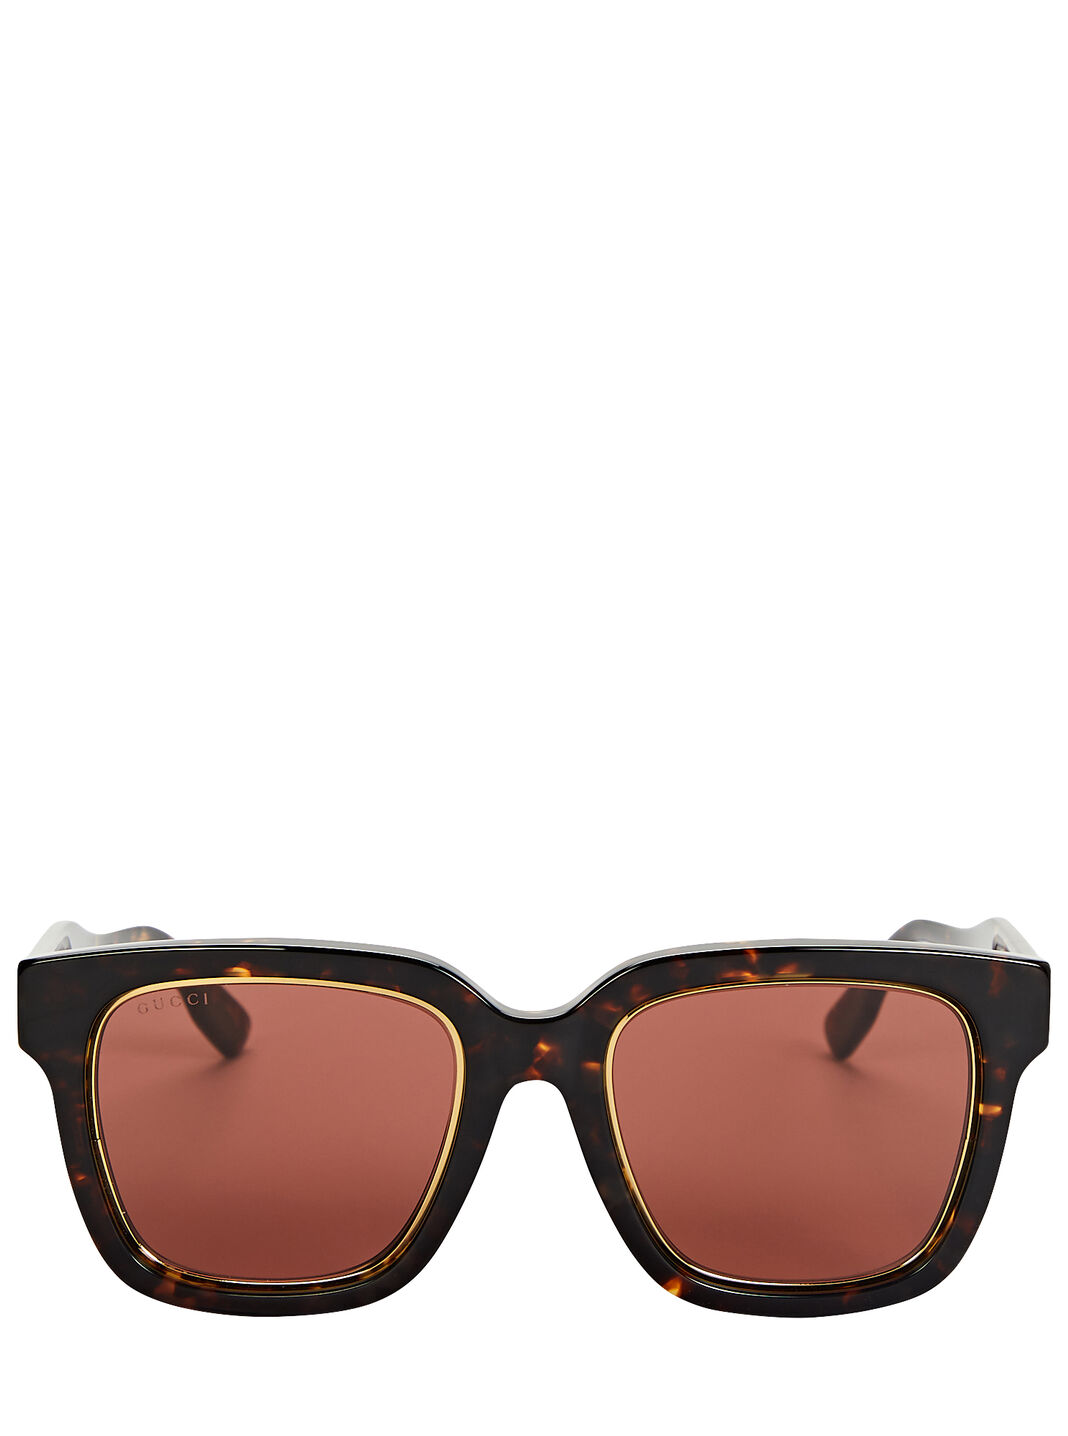 Oversized Square Tortoiseshell Sunglasses